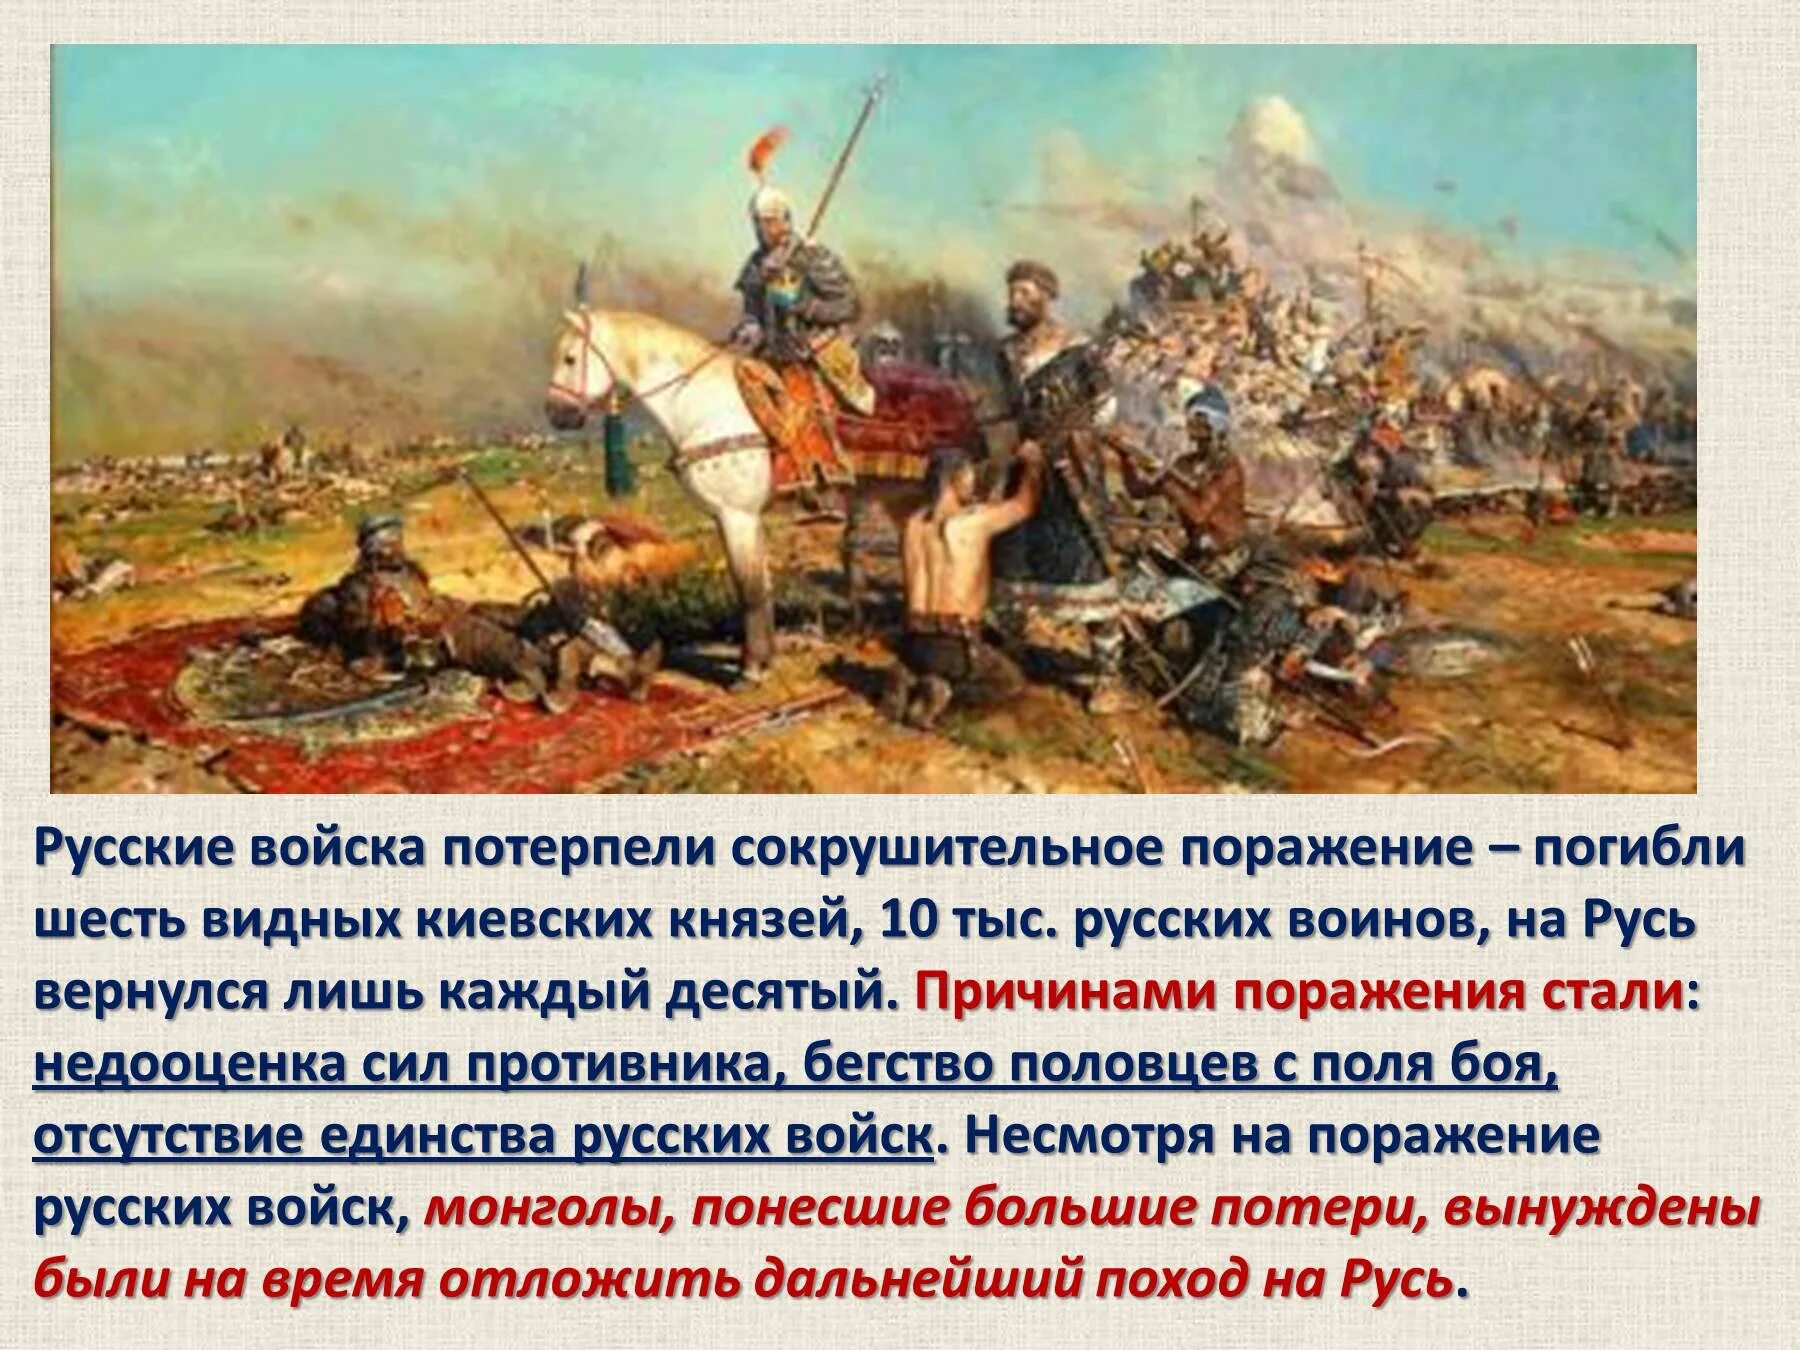 Поражение русских на реке калка. Битва при Калке 1223.